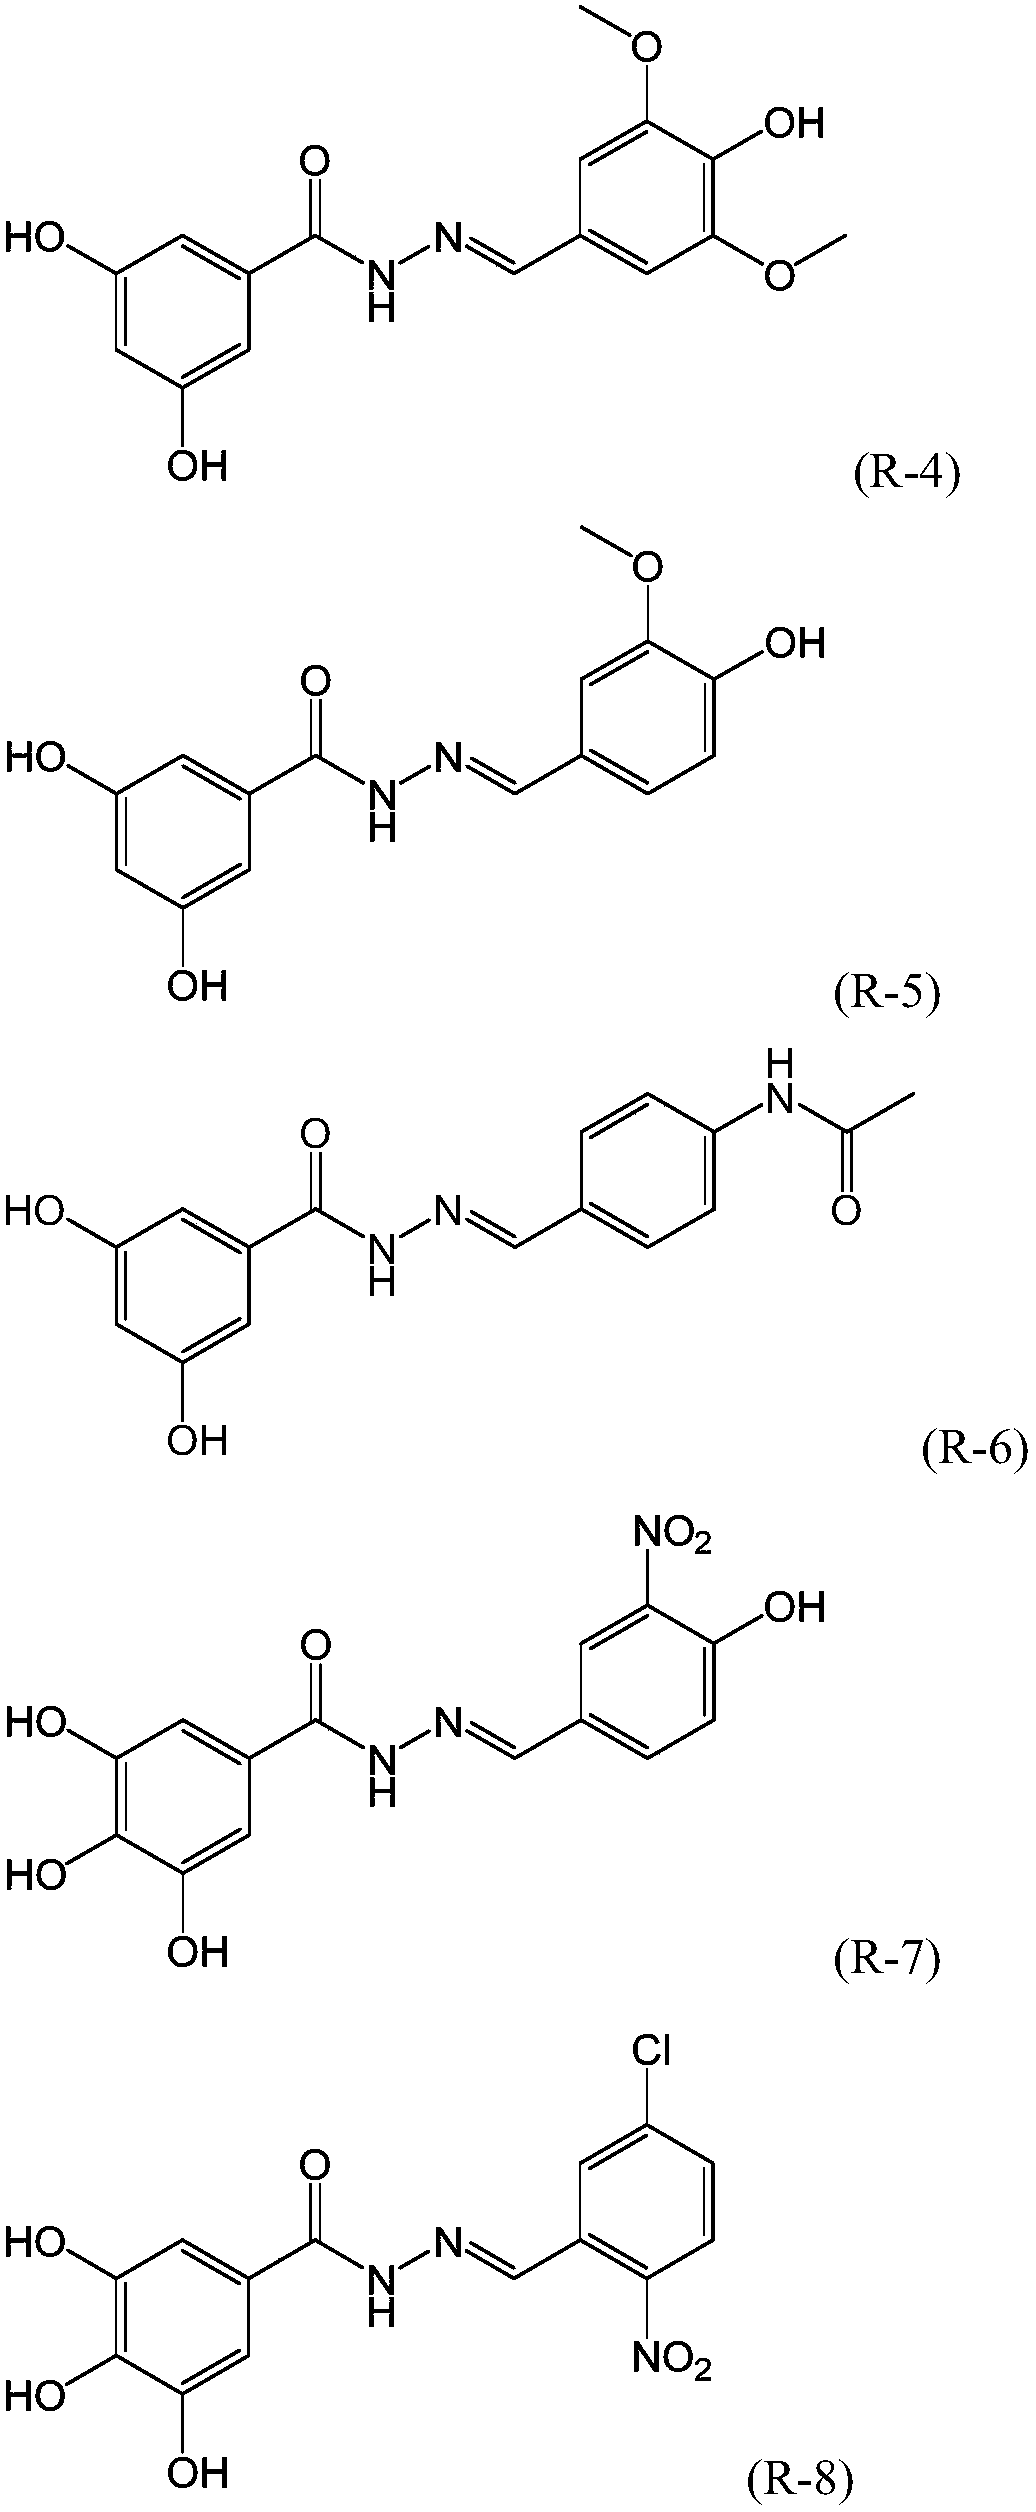 Benzoyl hydrazone neuraminidase inhibitor and preparation method and application thereof